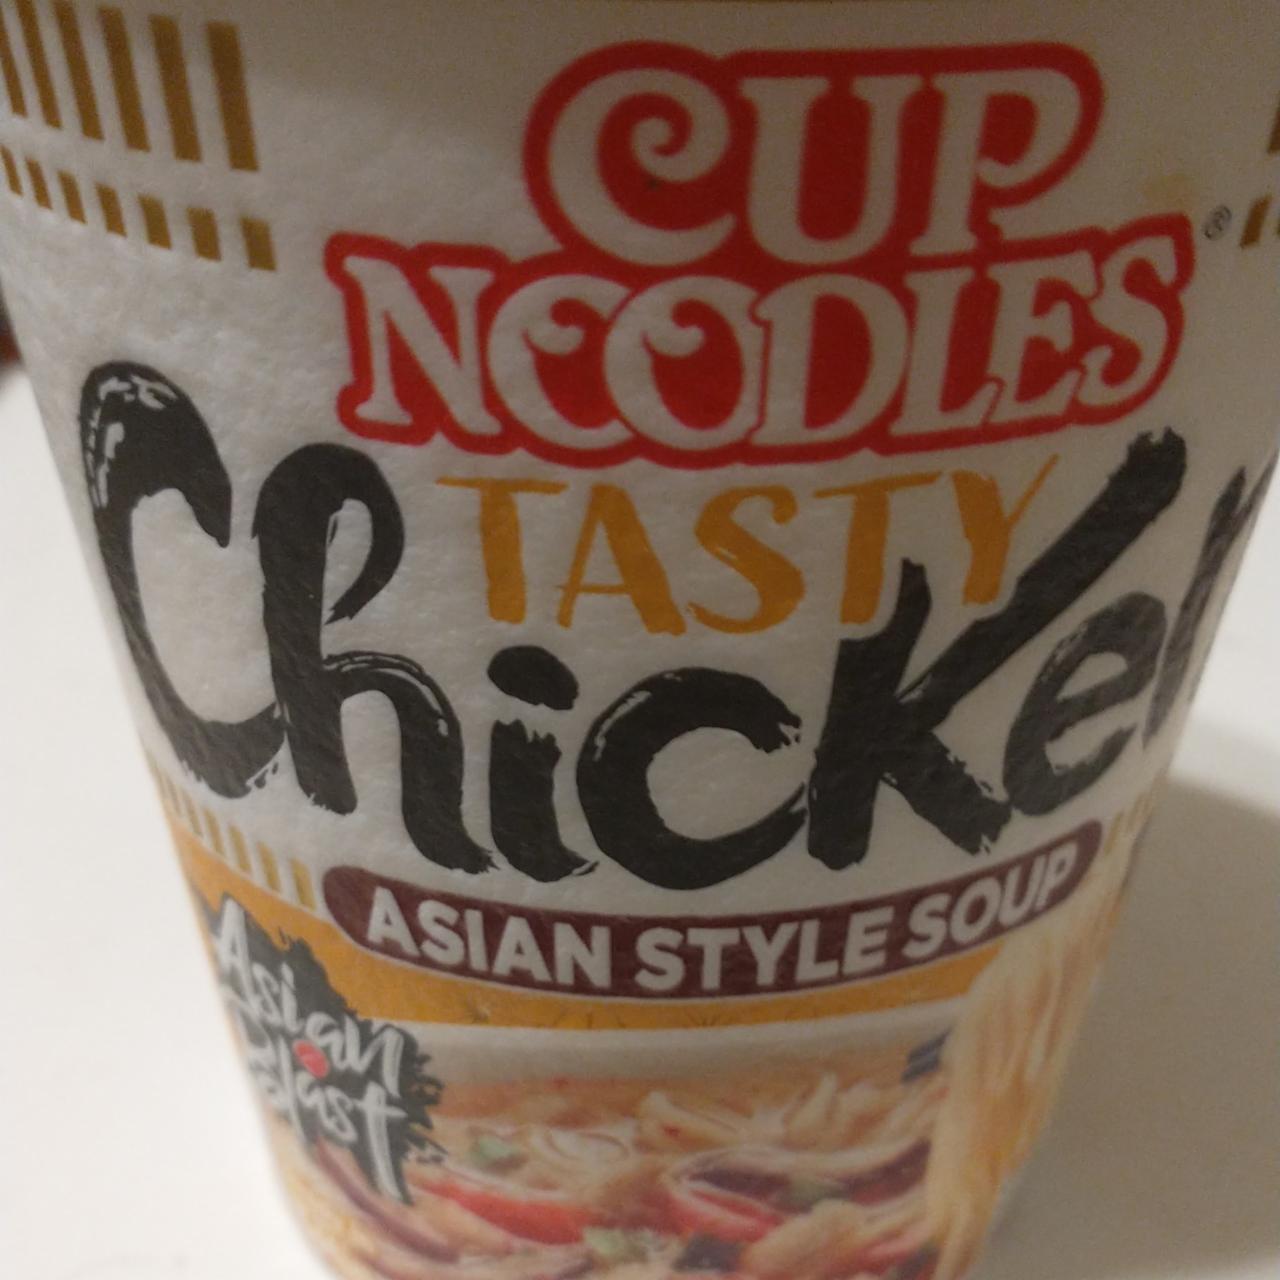 Zdjęcia - Tasty chicken asian style soup Cup Noodles